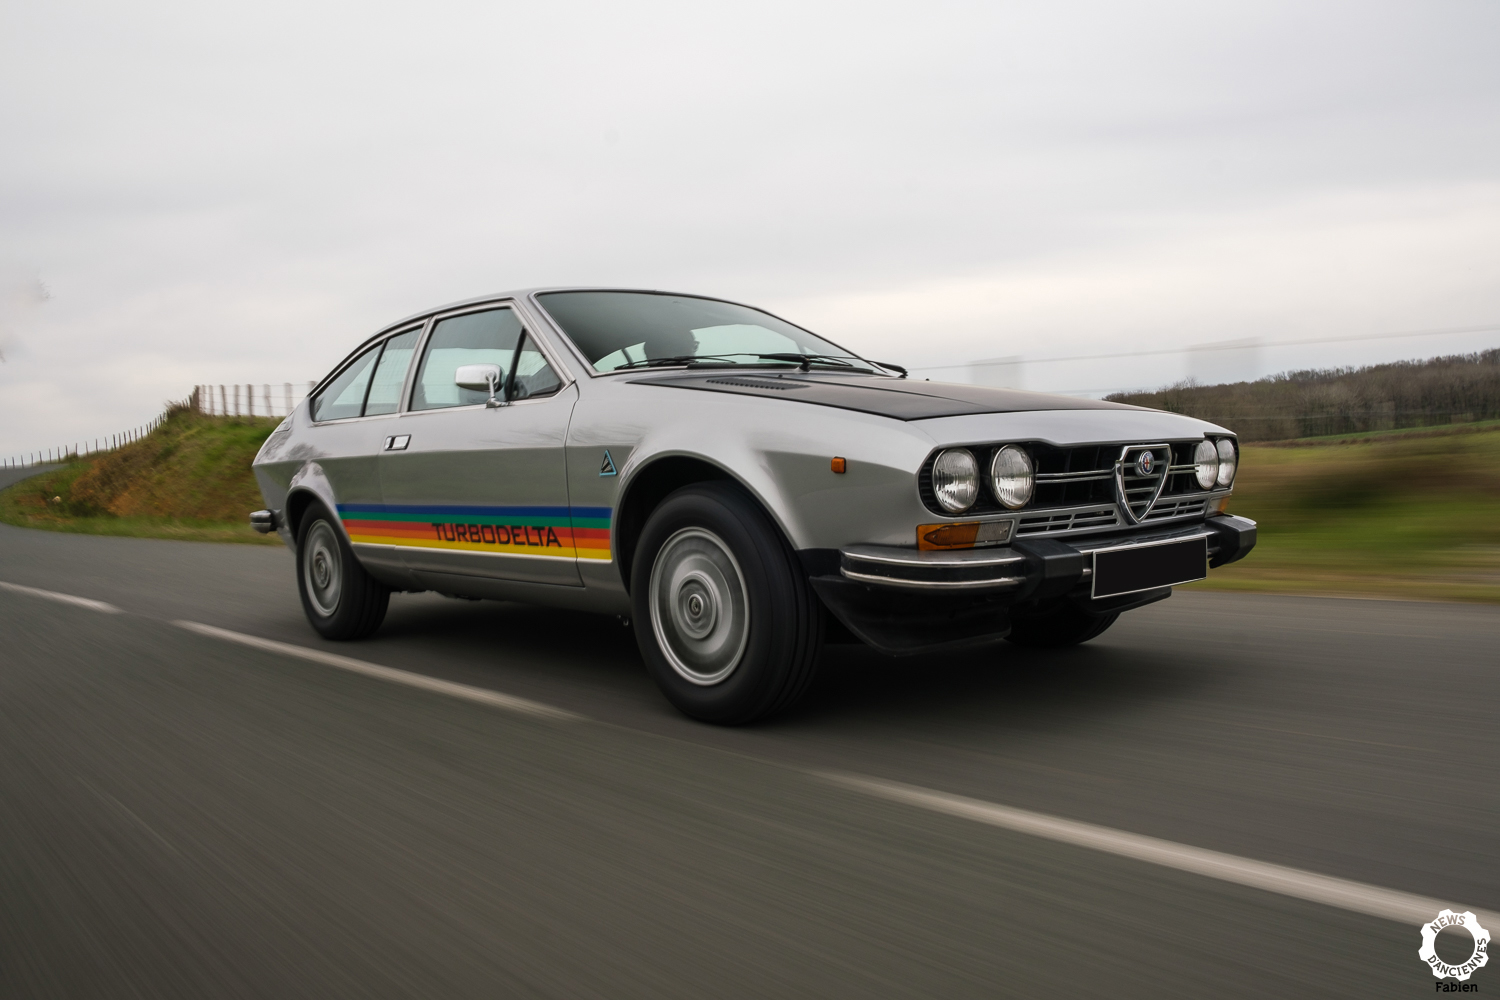 Essai d’une Alfa Romeo GTV Turbodelta, licorne version pur-sang !